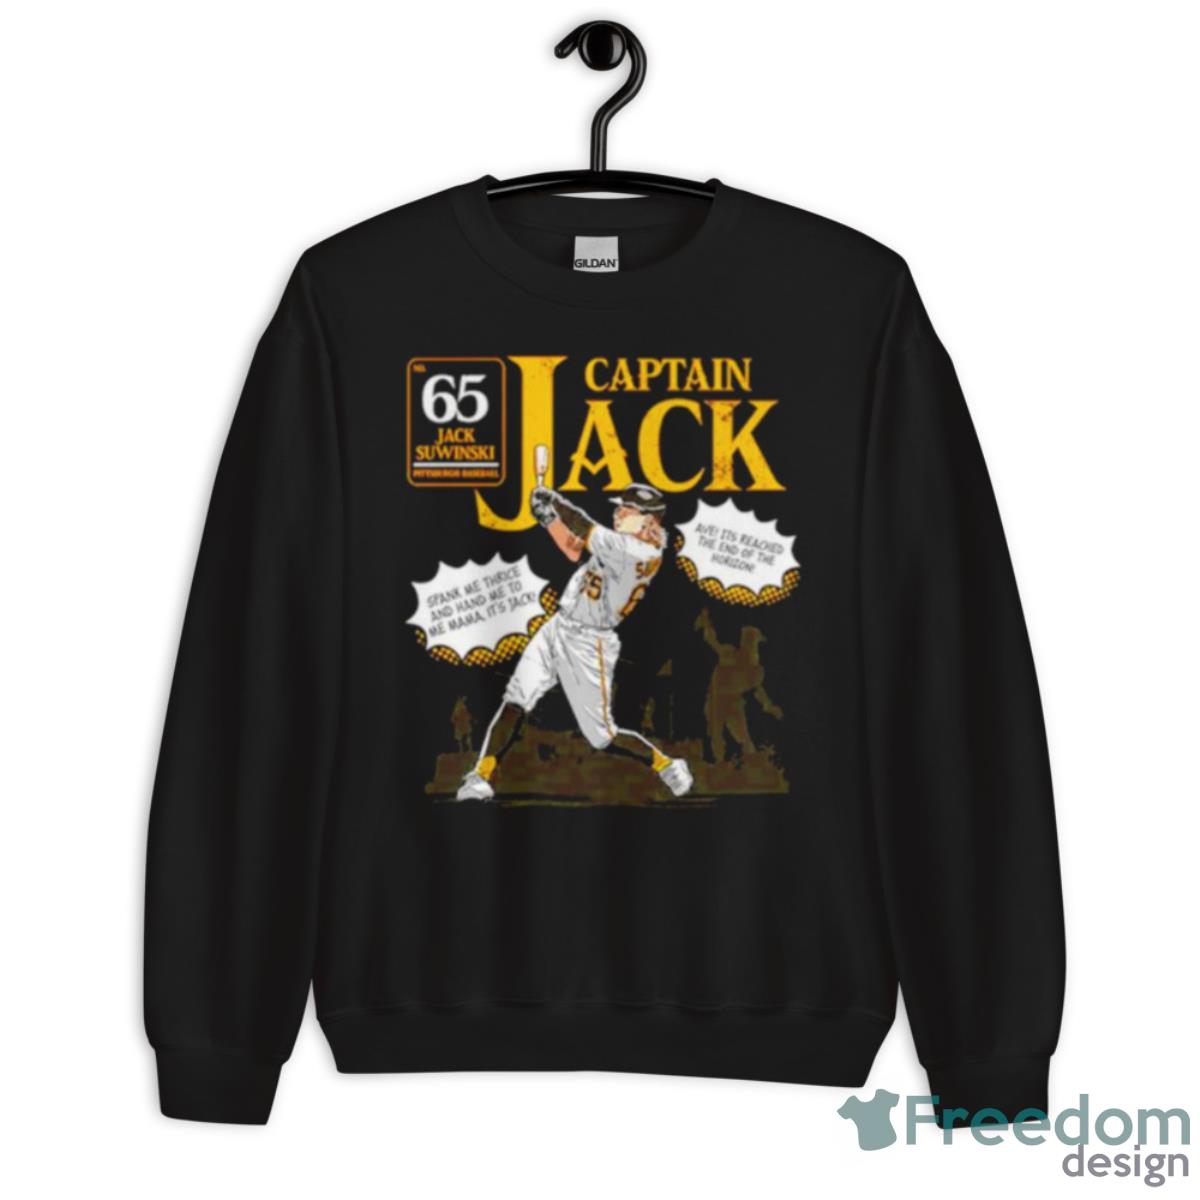 Captain Jack Suwinski spank me thrice and hand me to me mama it's Jack shirt,  hoodie, sweatshirt and tank top